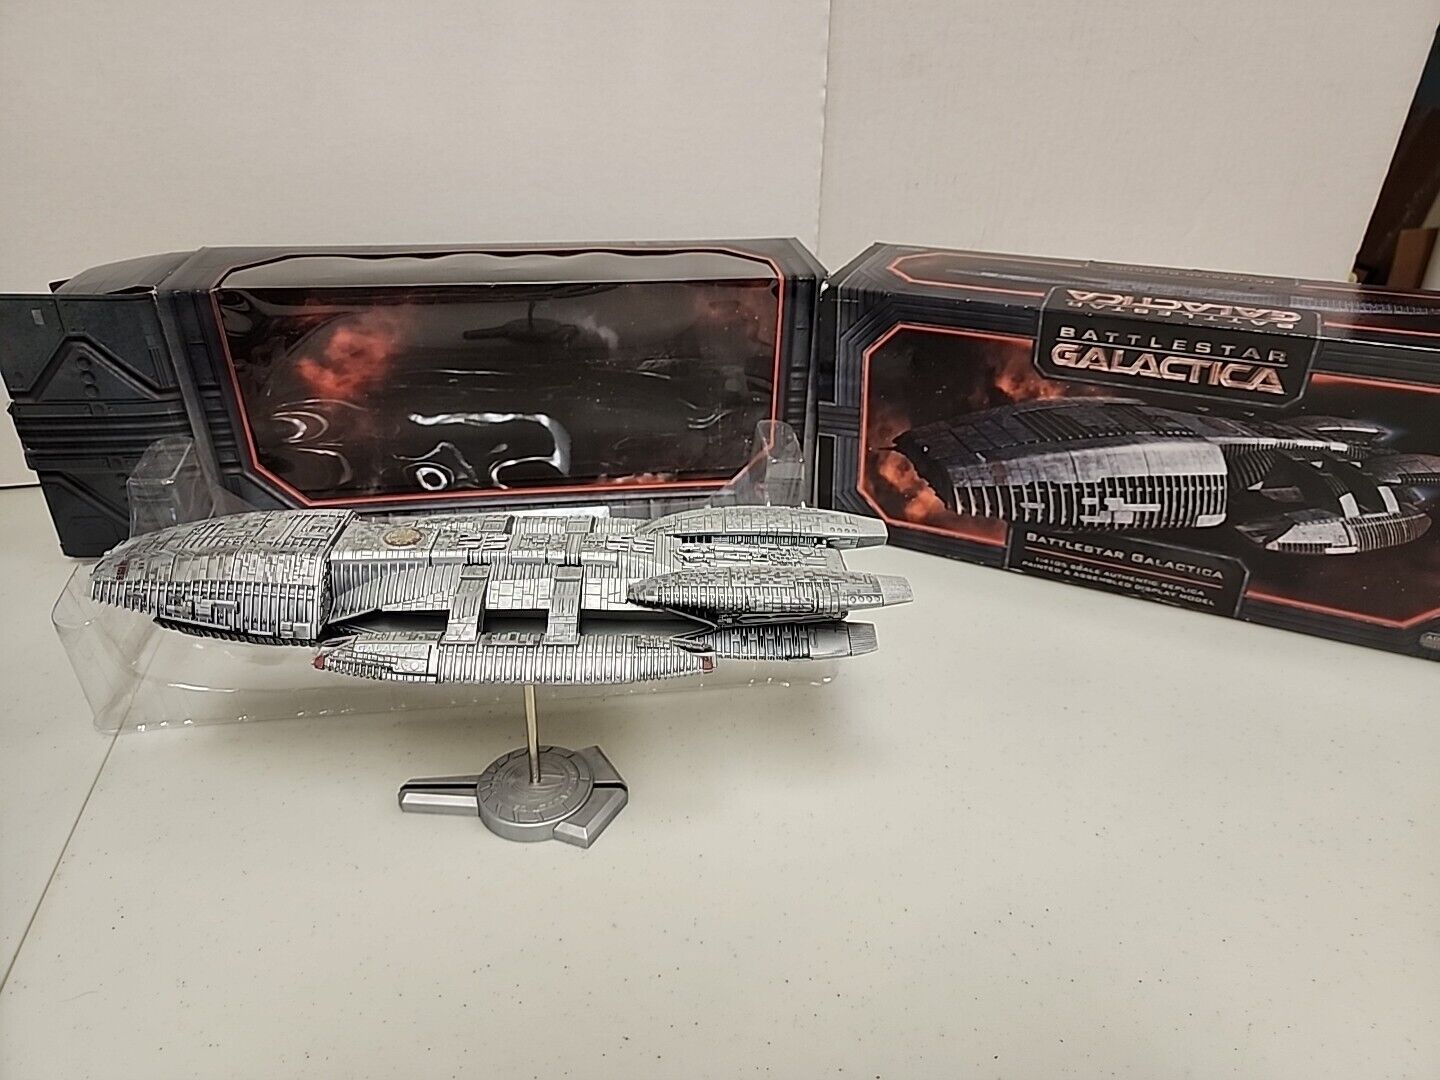 2012 Moebius Models Battlestar Galactica 1:4105 Scale Model Displayed